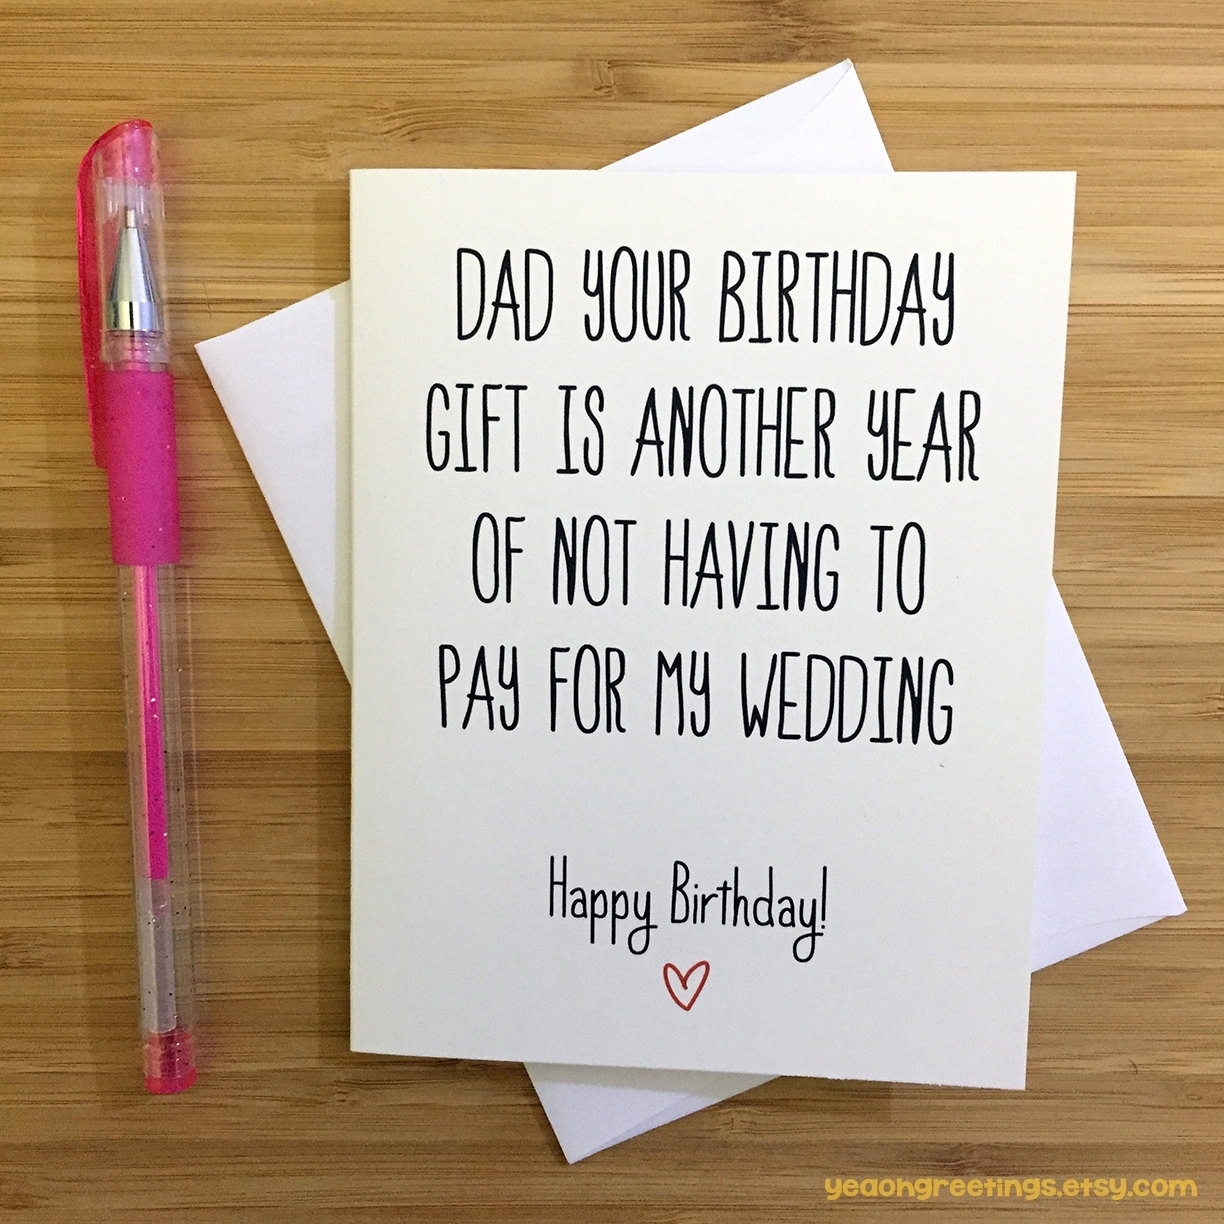 Homemade Birthday Cards For Dad Ideas 99 Homemade Birthday Cards For Dad From Daughter Birthday Cards